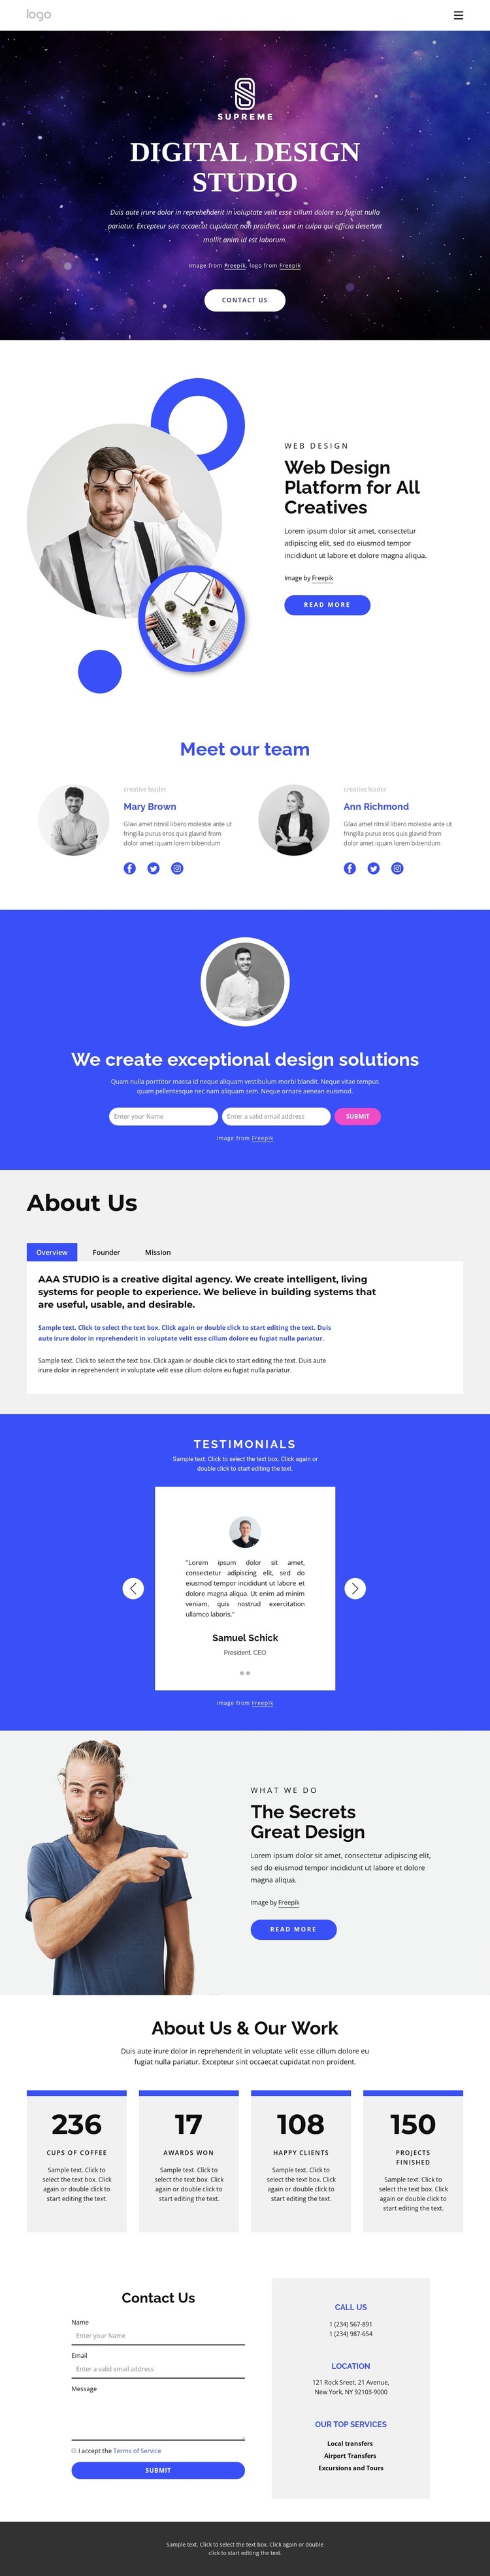 Digital design agency Web Design